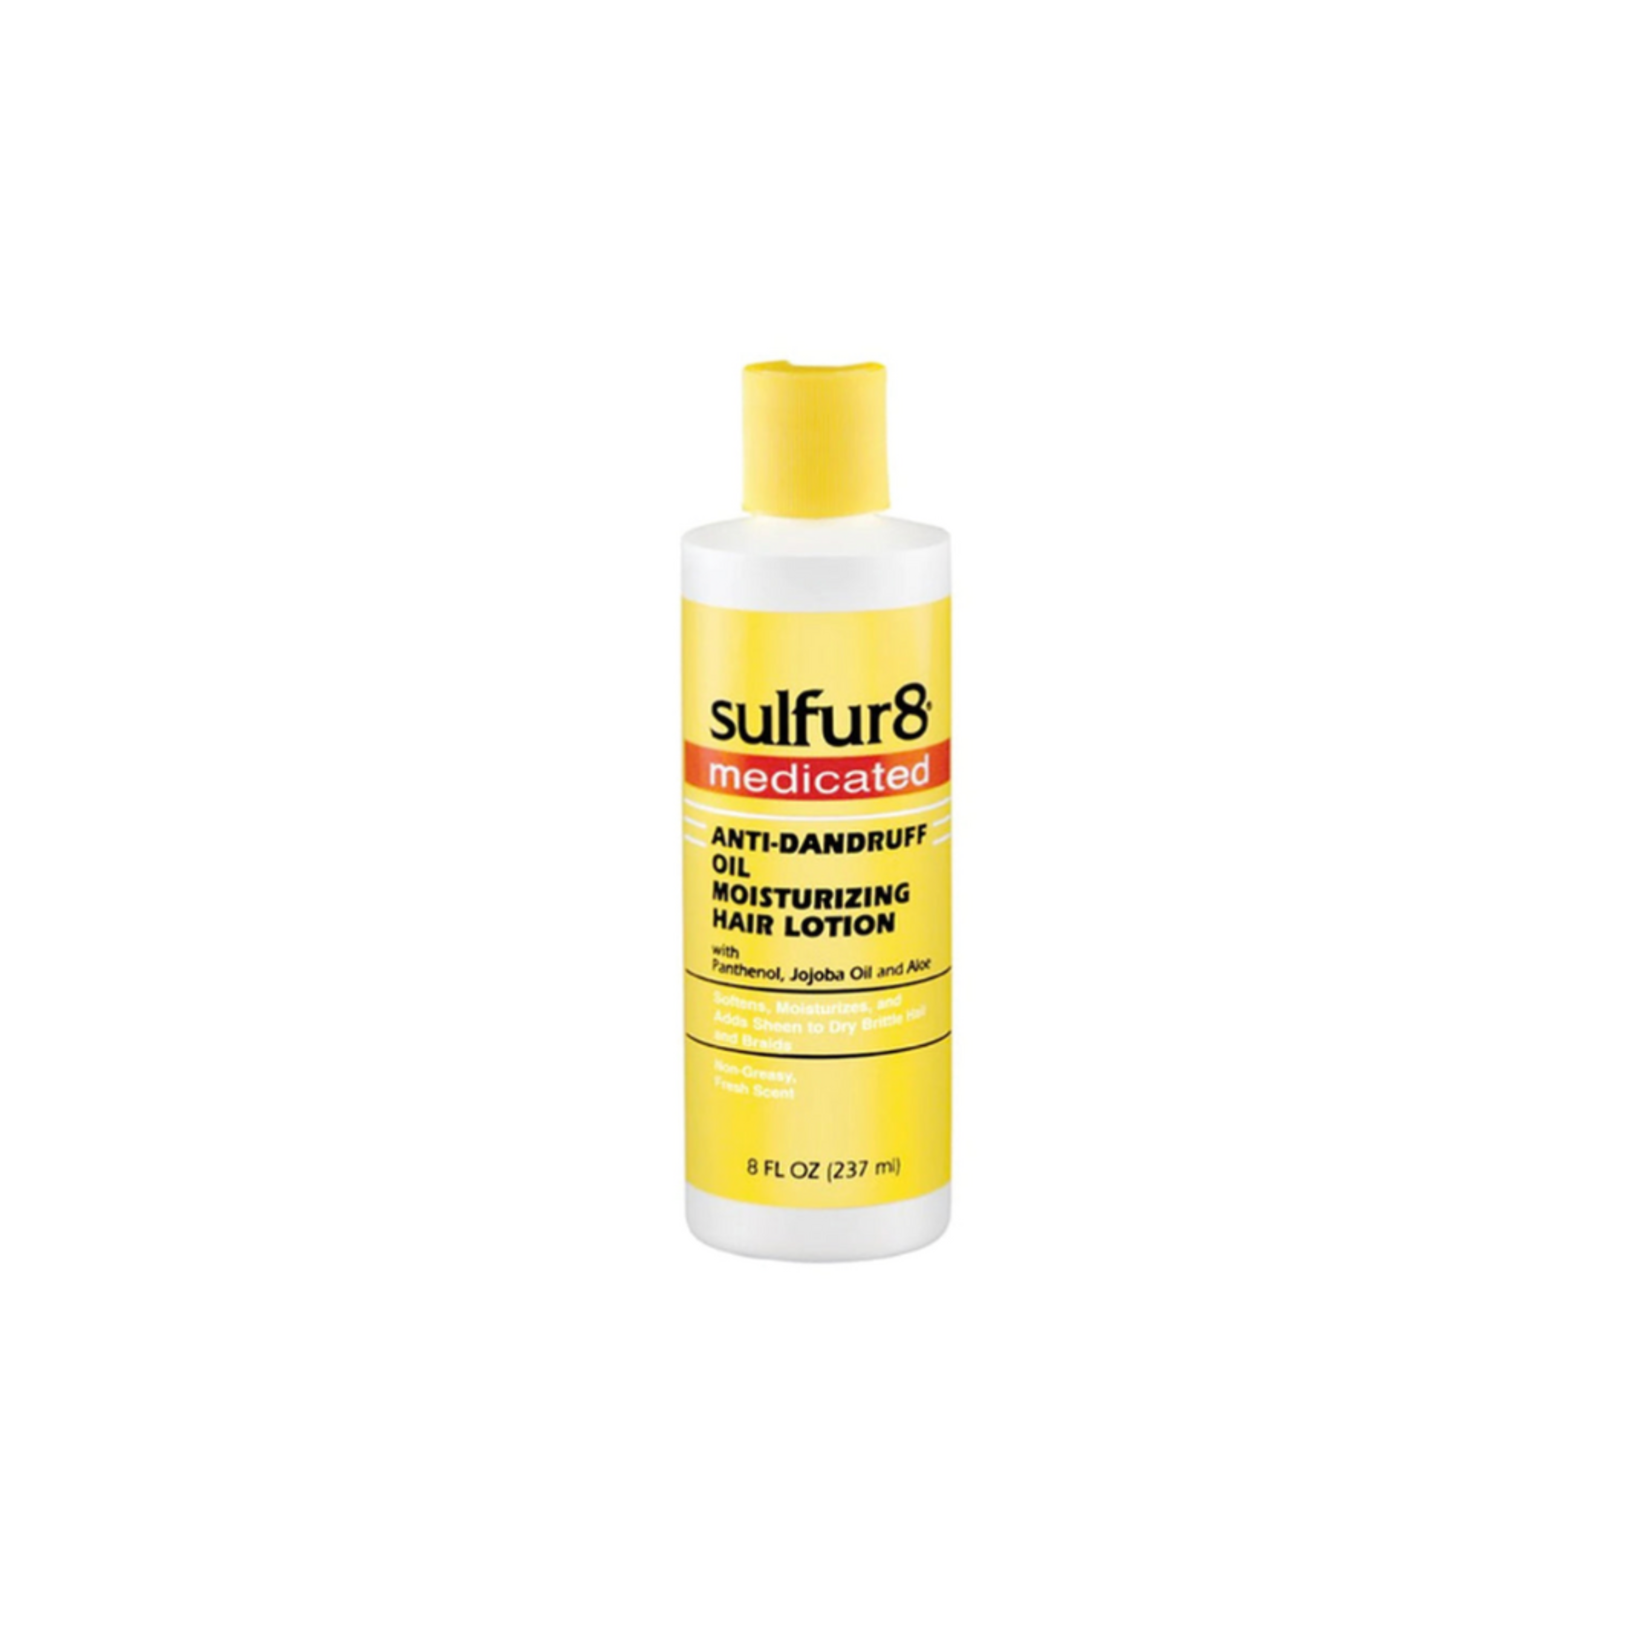 sulfur8 Sulfur8 medicated Anti-Dandruff Oil Moisturizing Hair Lotion 8FL OZ